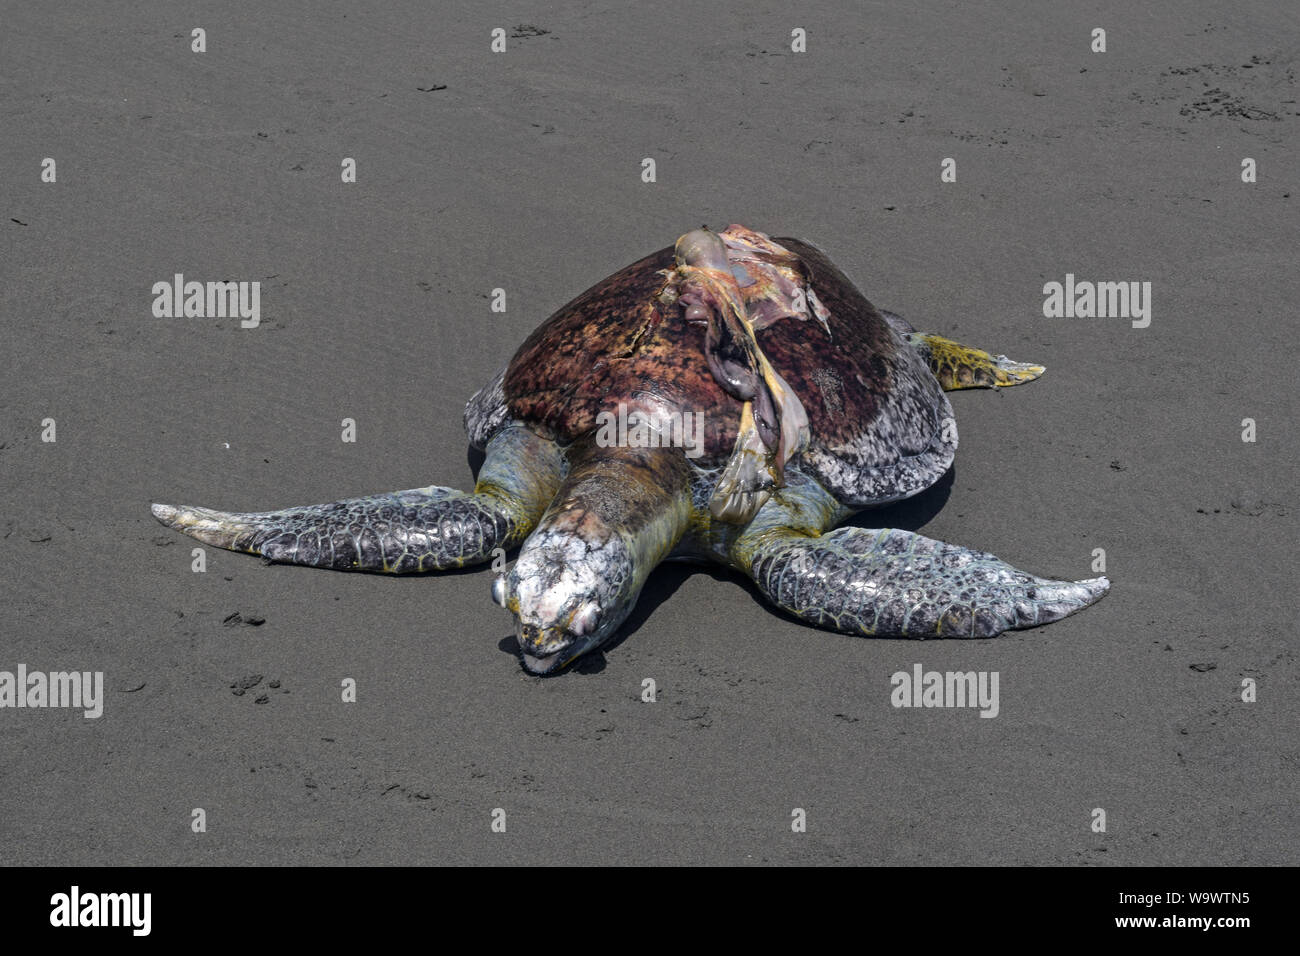 Gefährdete Echte Karettschildkröte (Eretmochelys imbricata) mit dem Boot Propeller in Ladrilleros, Pazifikküste Kolumbiens getötet. Stockfoto